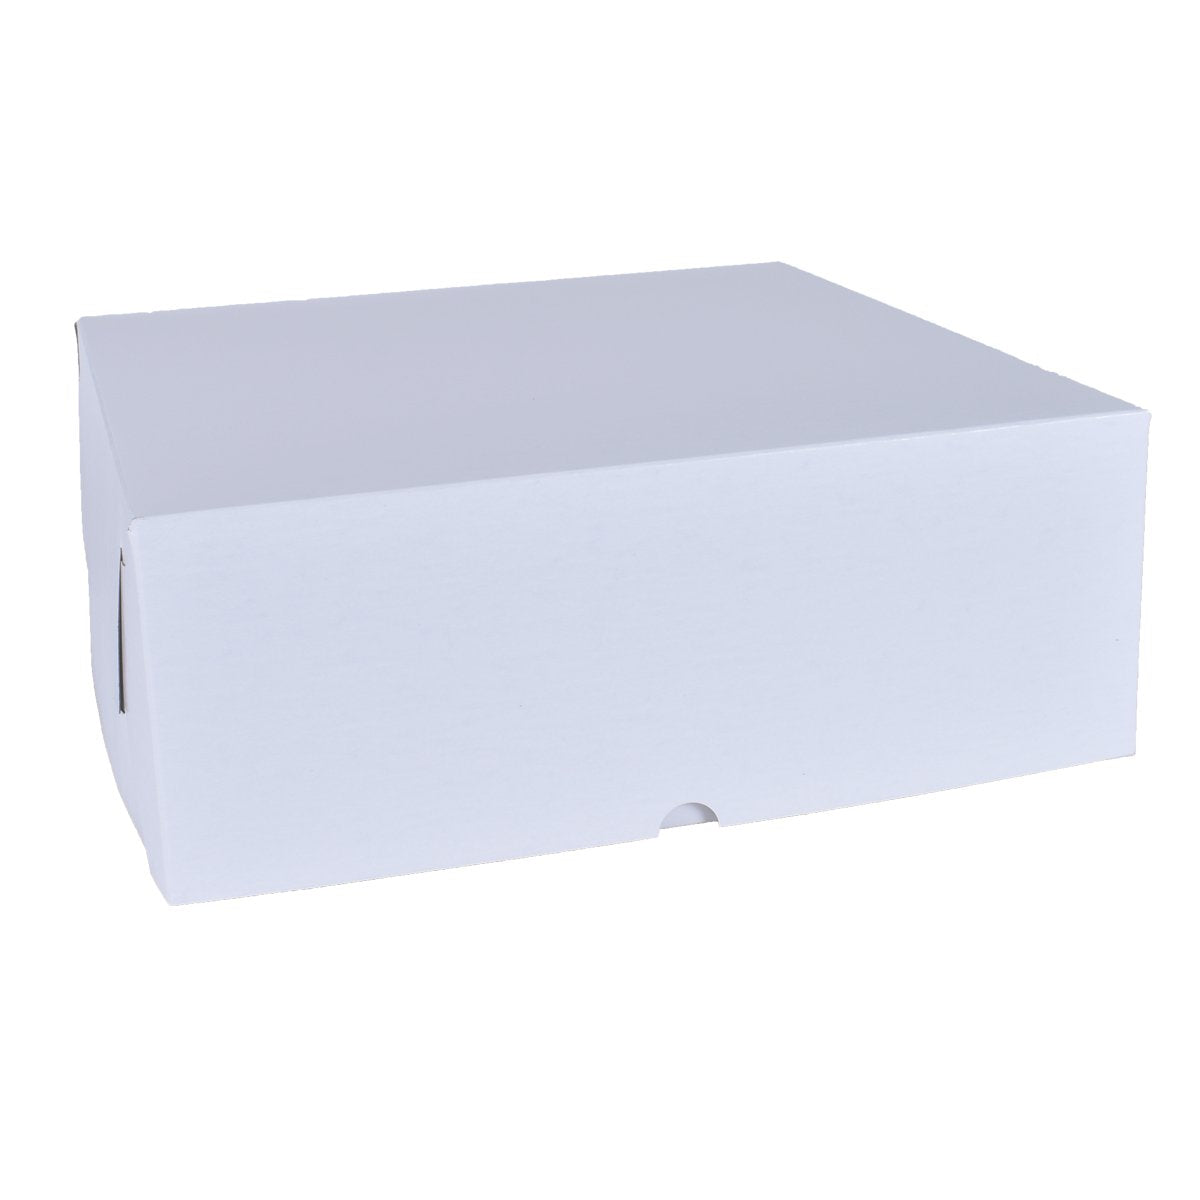 White Cake Boxes - 12x12x4 Bake Supply Plus Box - Bake Supply Plus